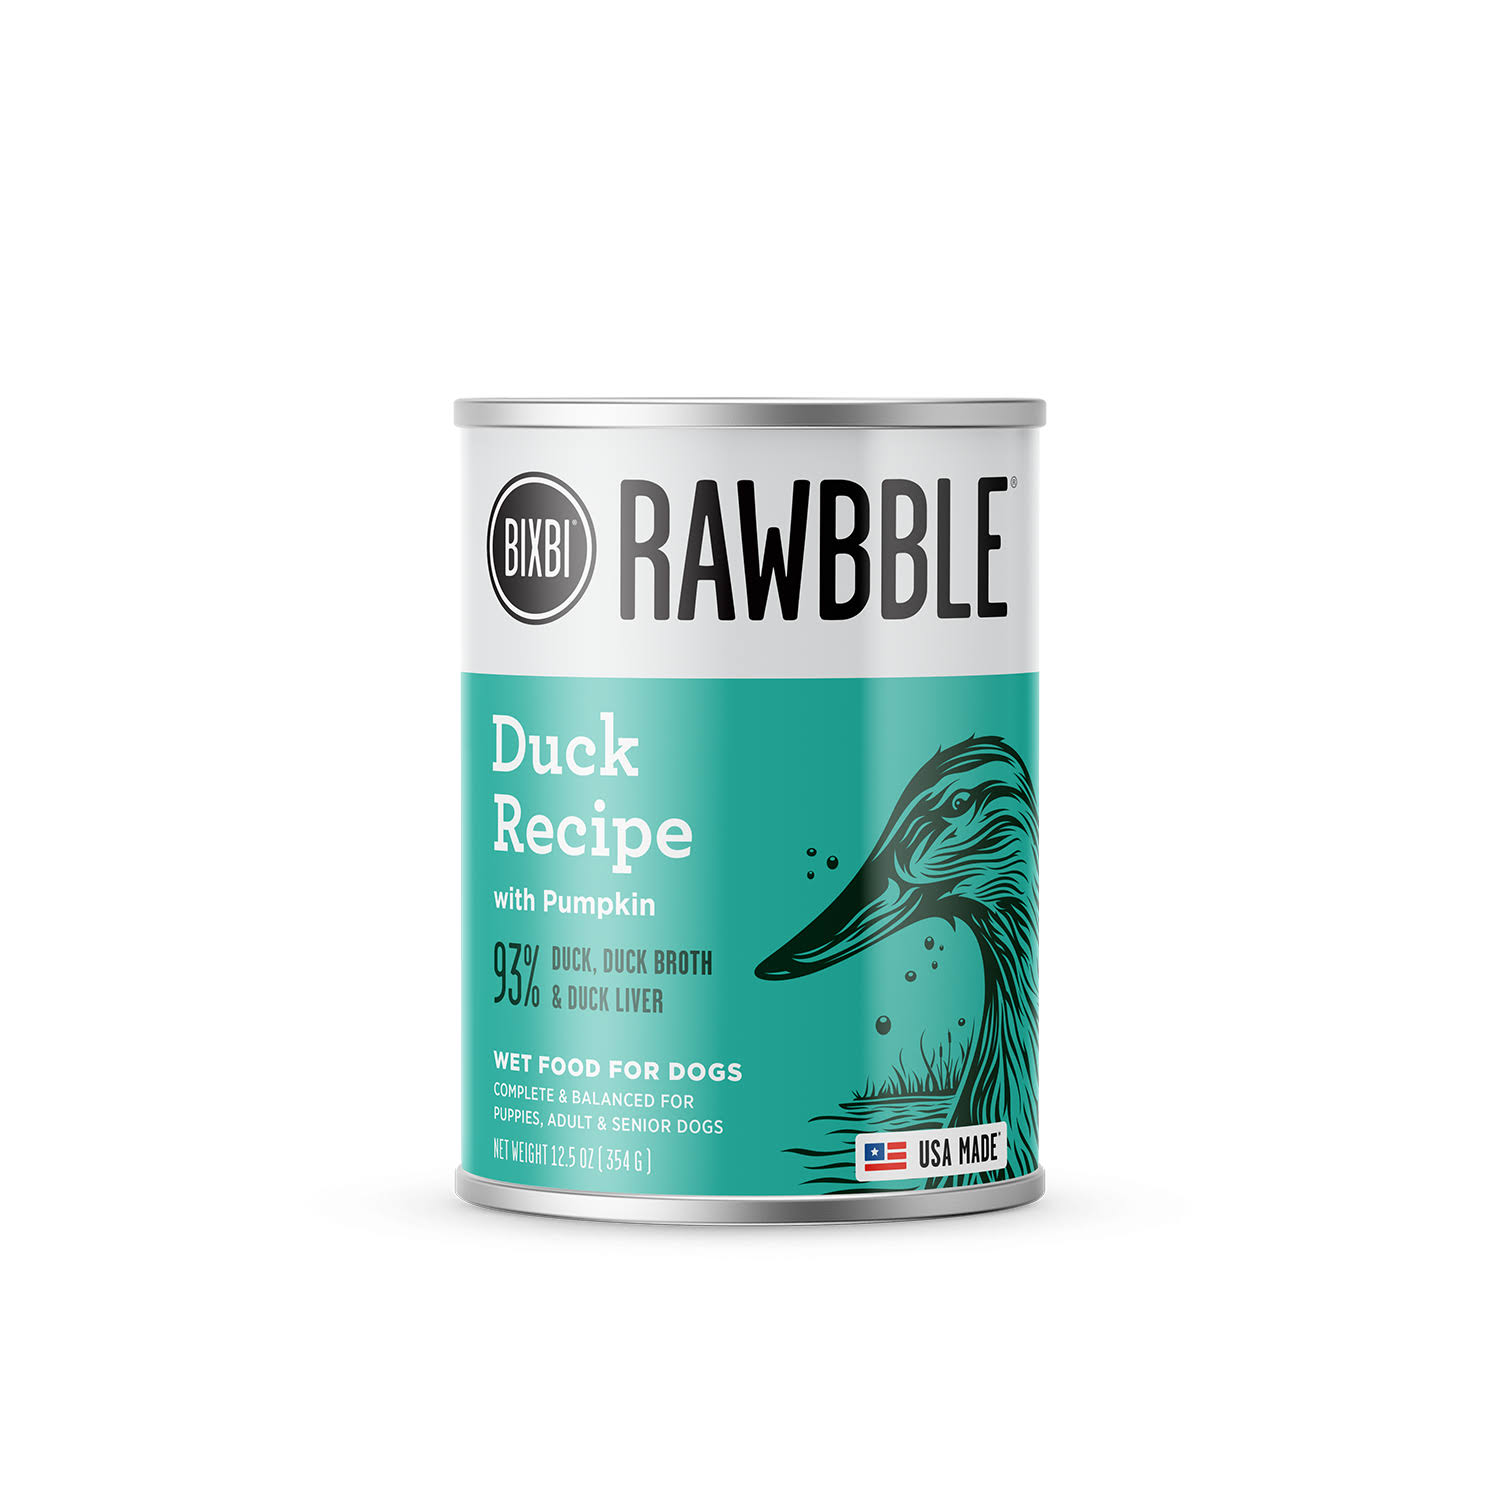 Bixbi Rawbble Duck with Pumpkin Wet Dog Food, 12.5-oz